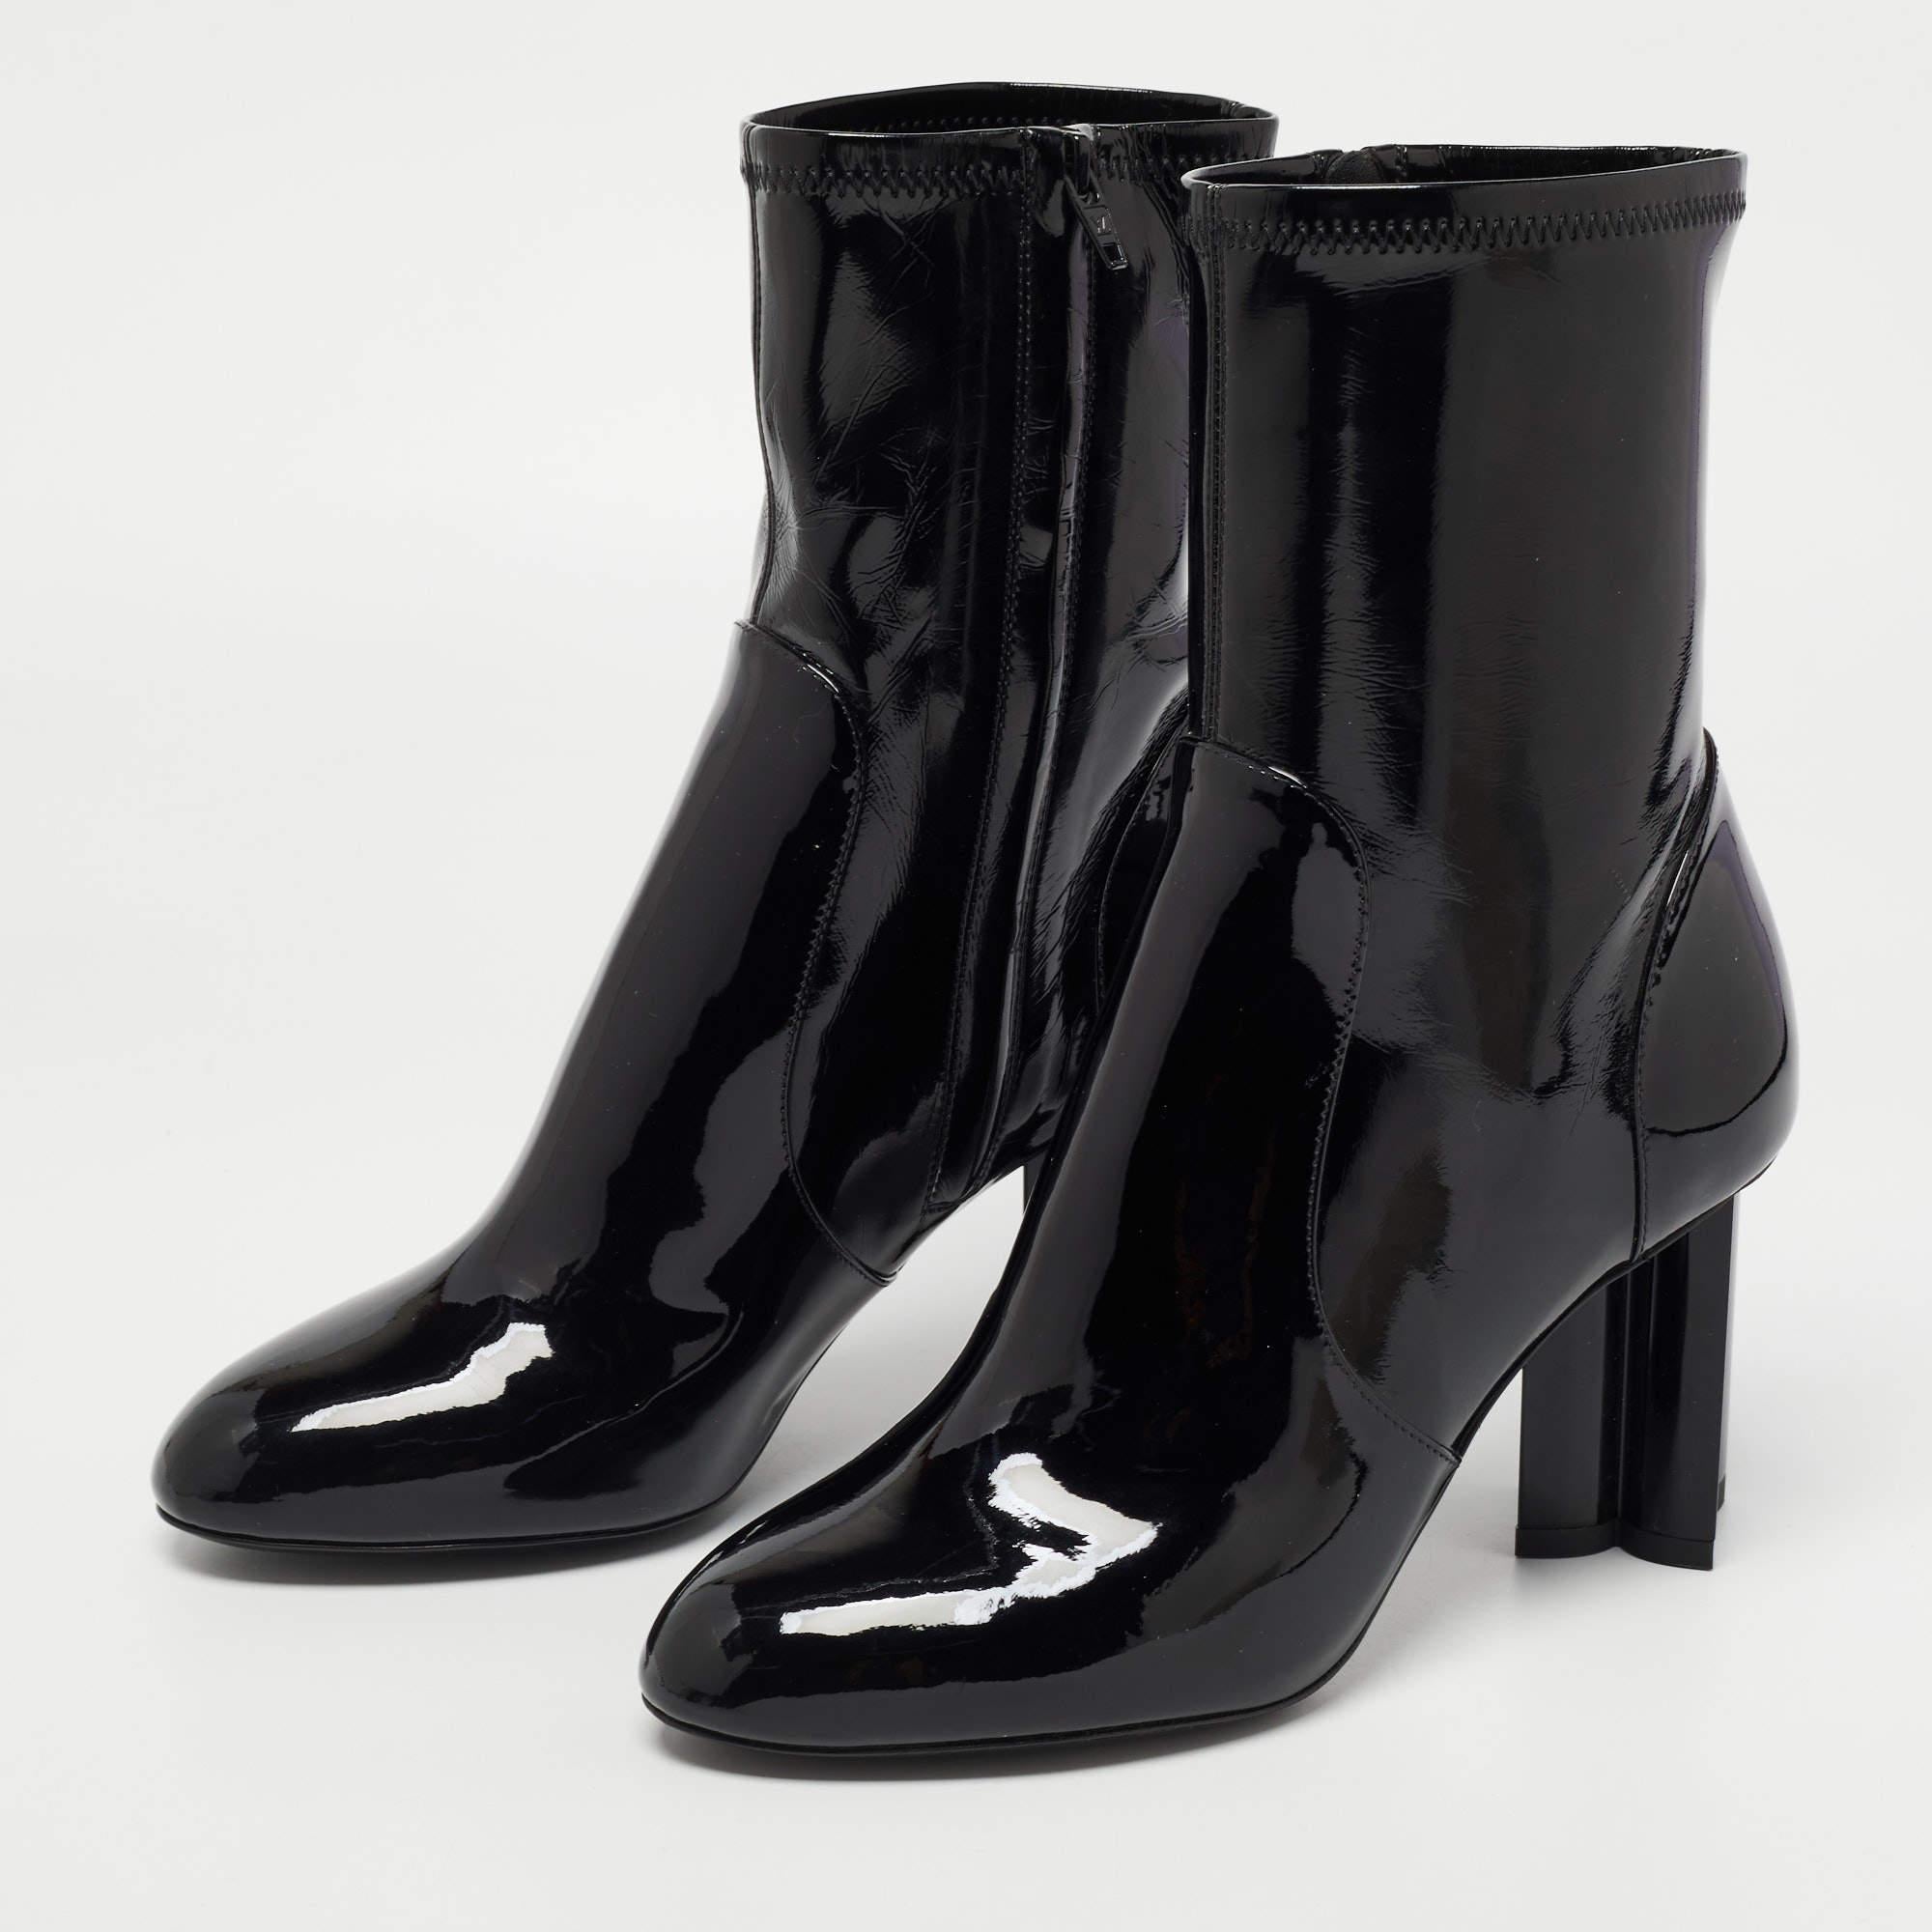 Women's Louis Vuitton Black Patent Leather Silhouette Ankle Boots Size 35